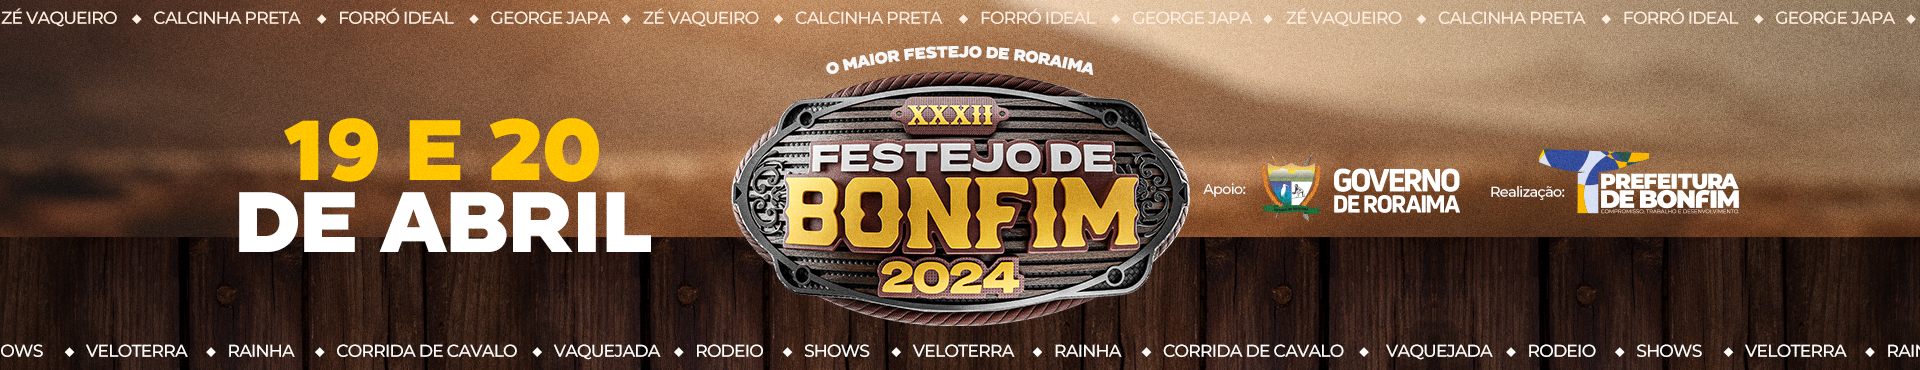 XXXII FESTEJO DE BONFIM 2024